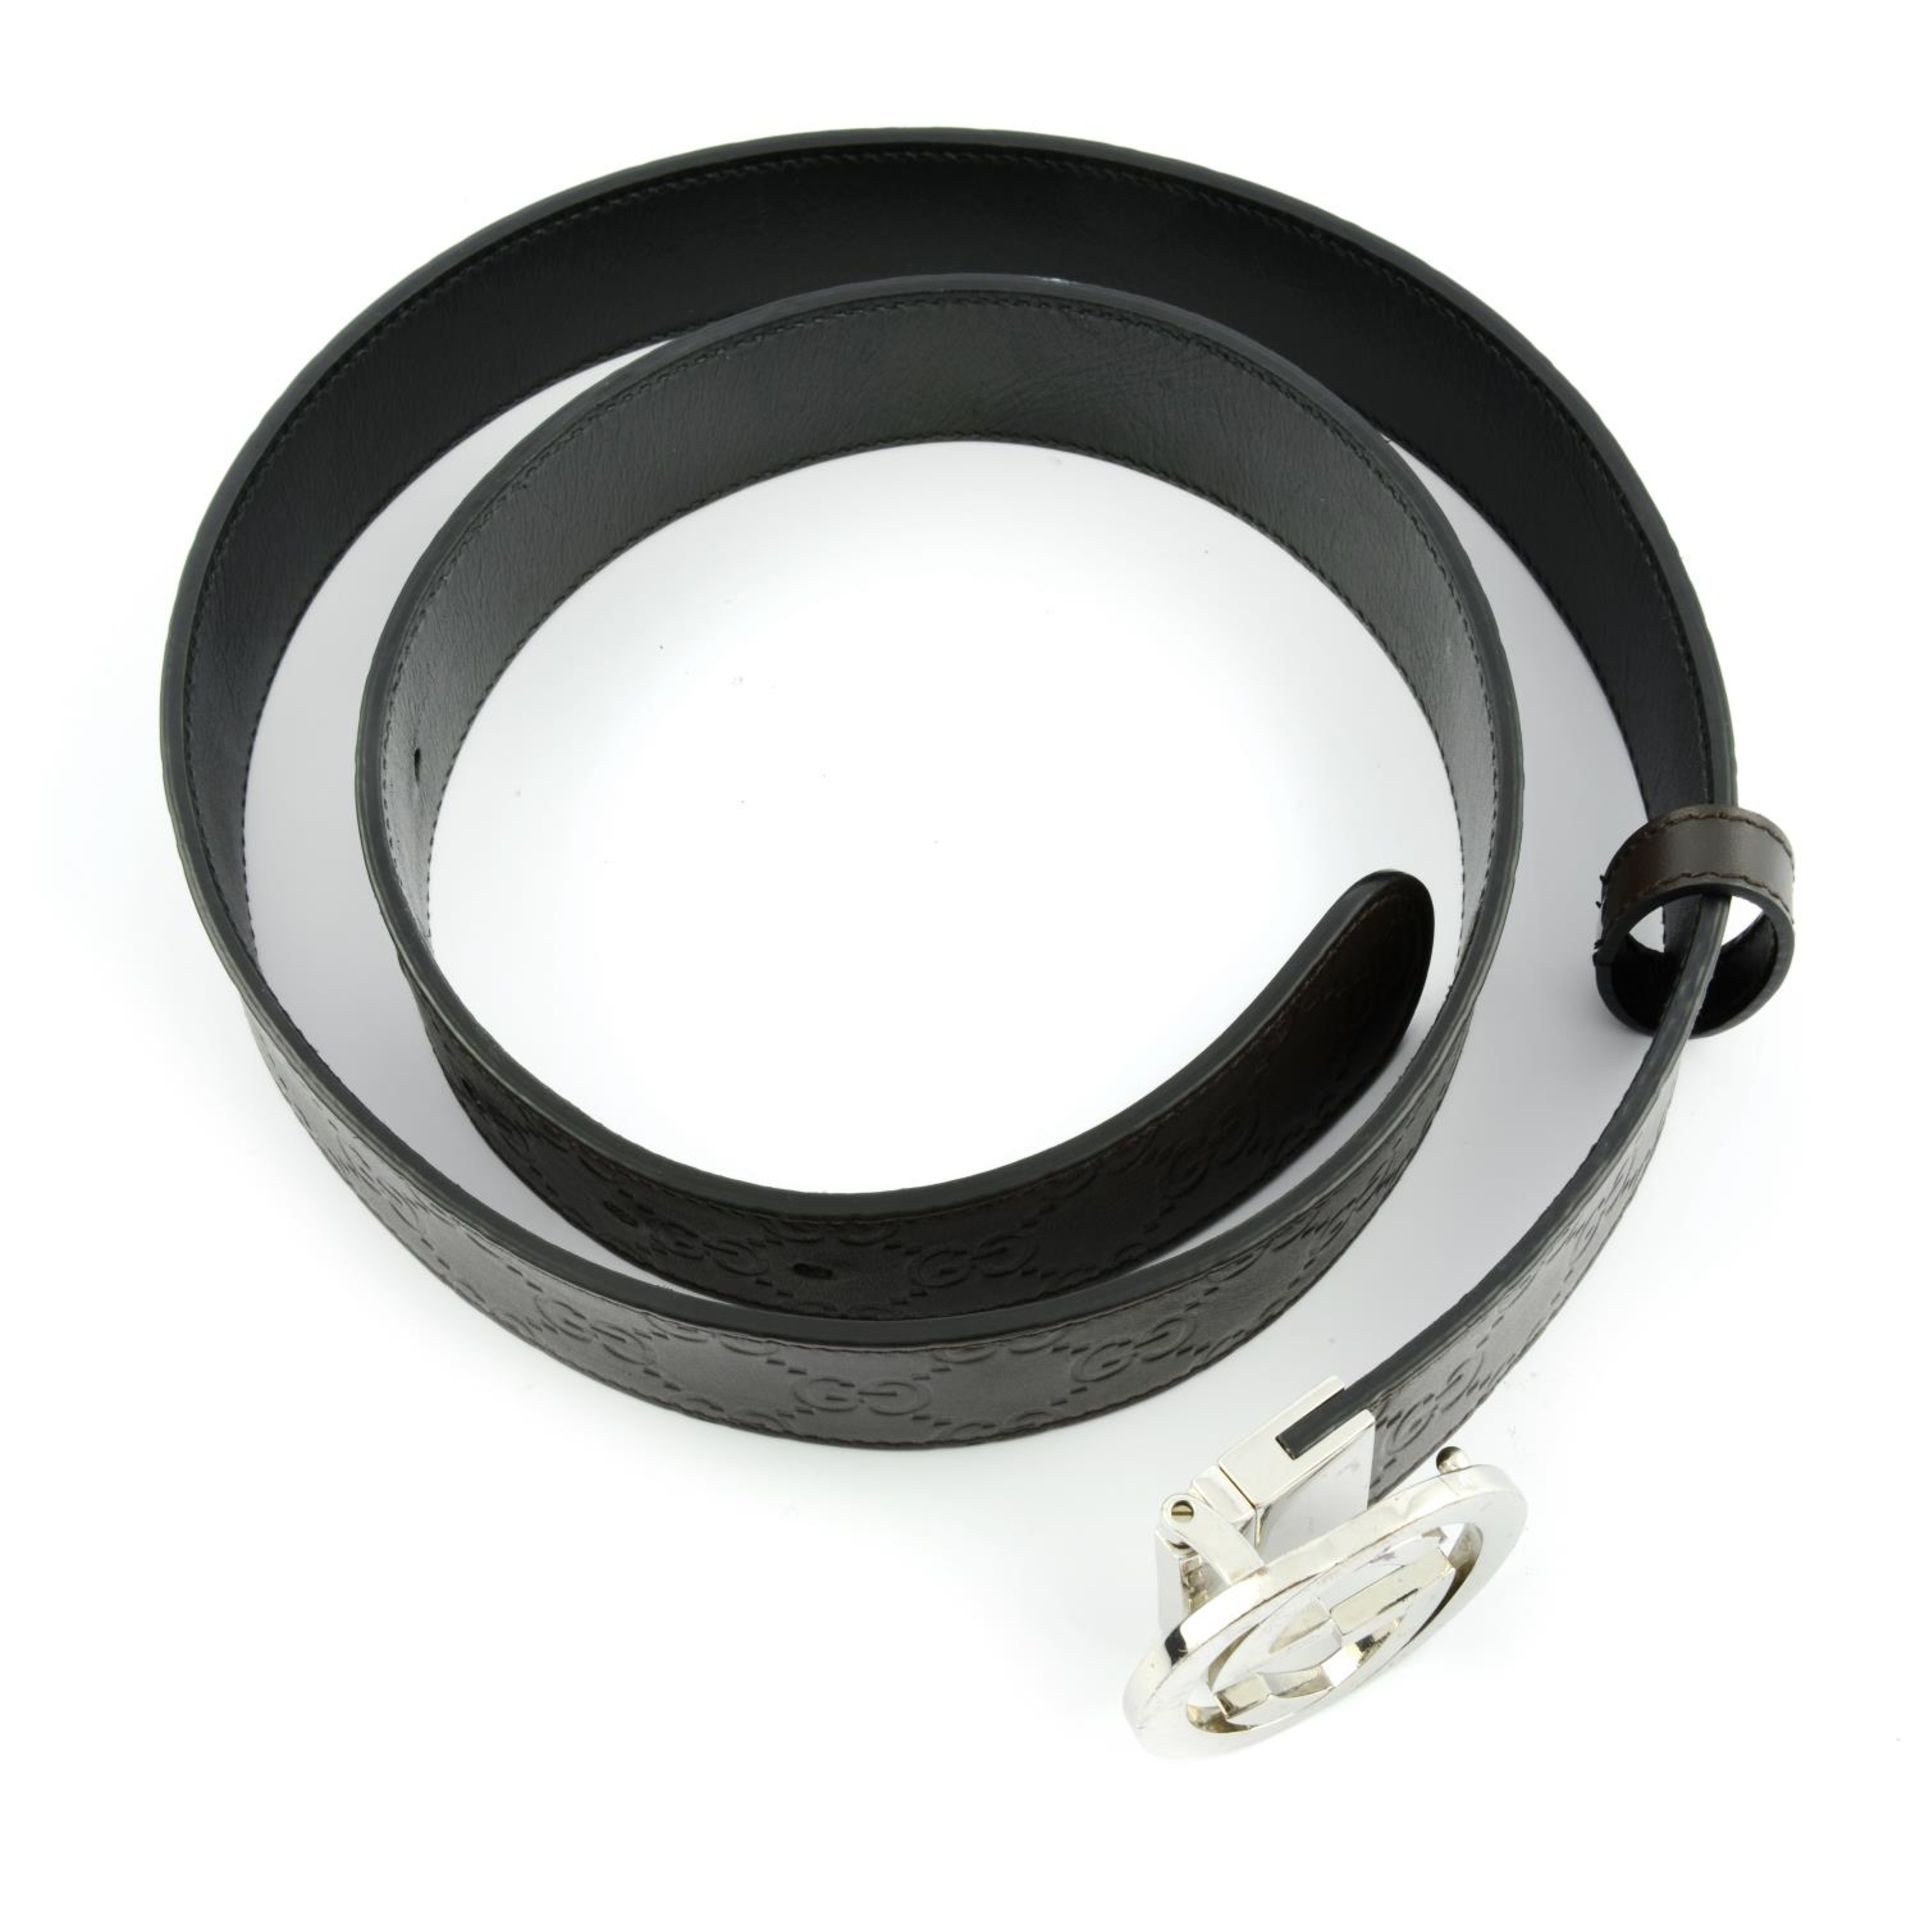 GUCCI - an interlocking GG reversible belt. - Image 2 of 5